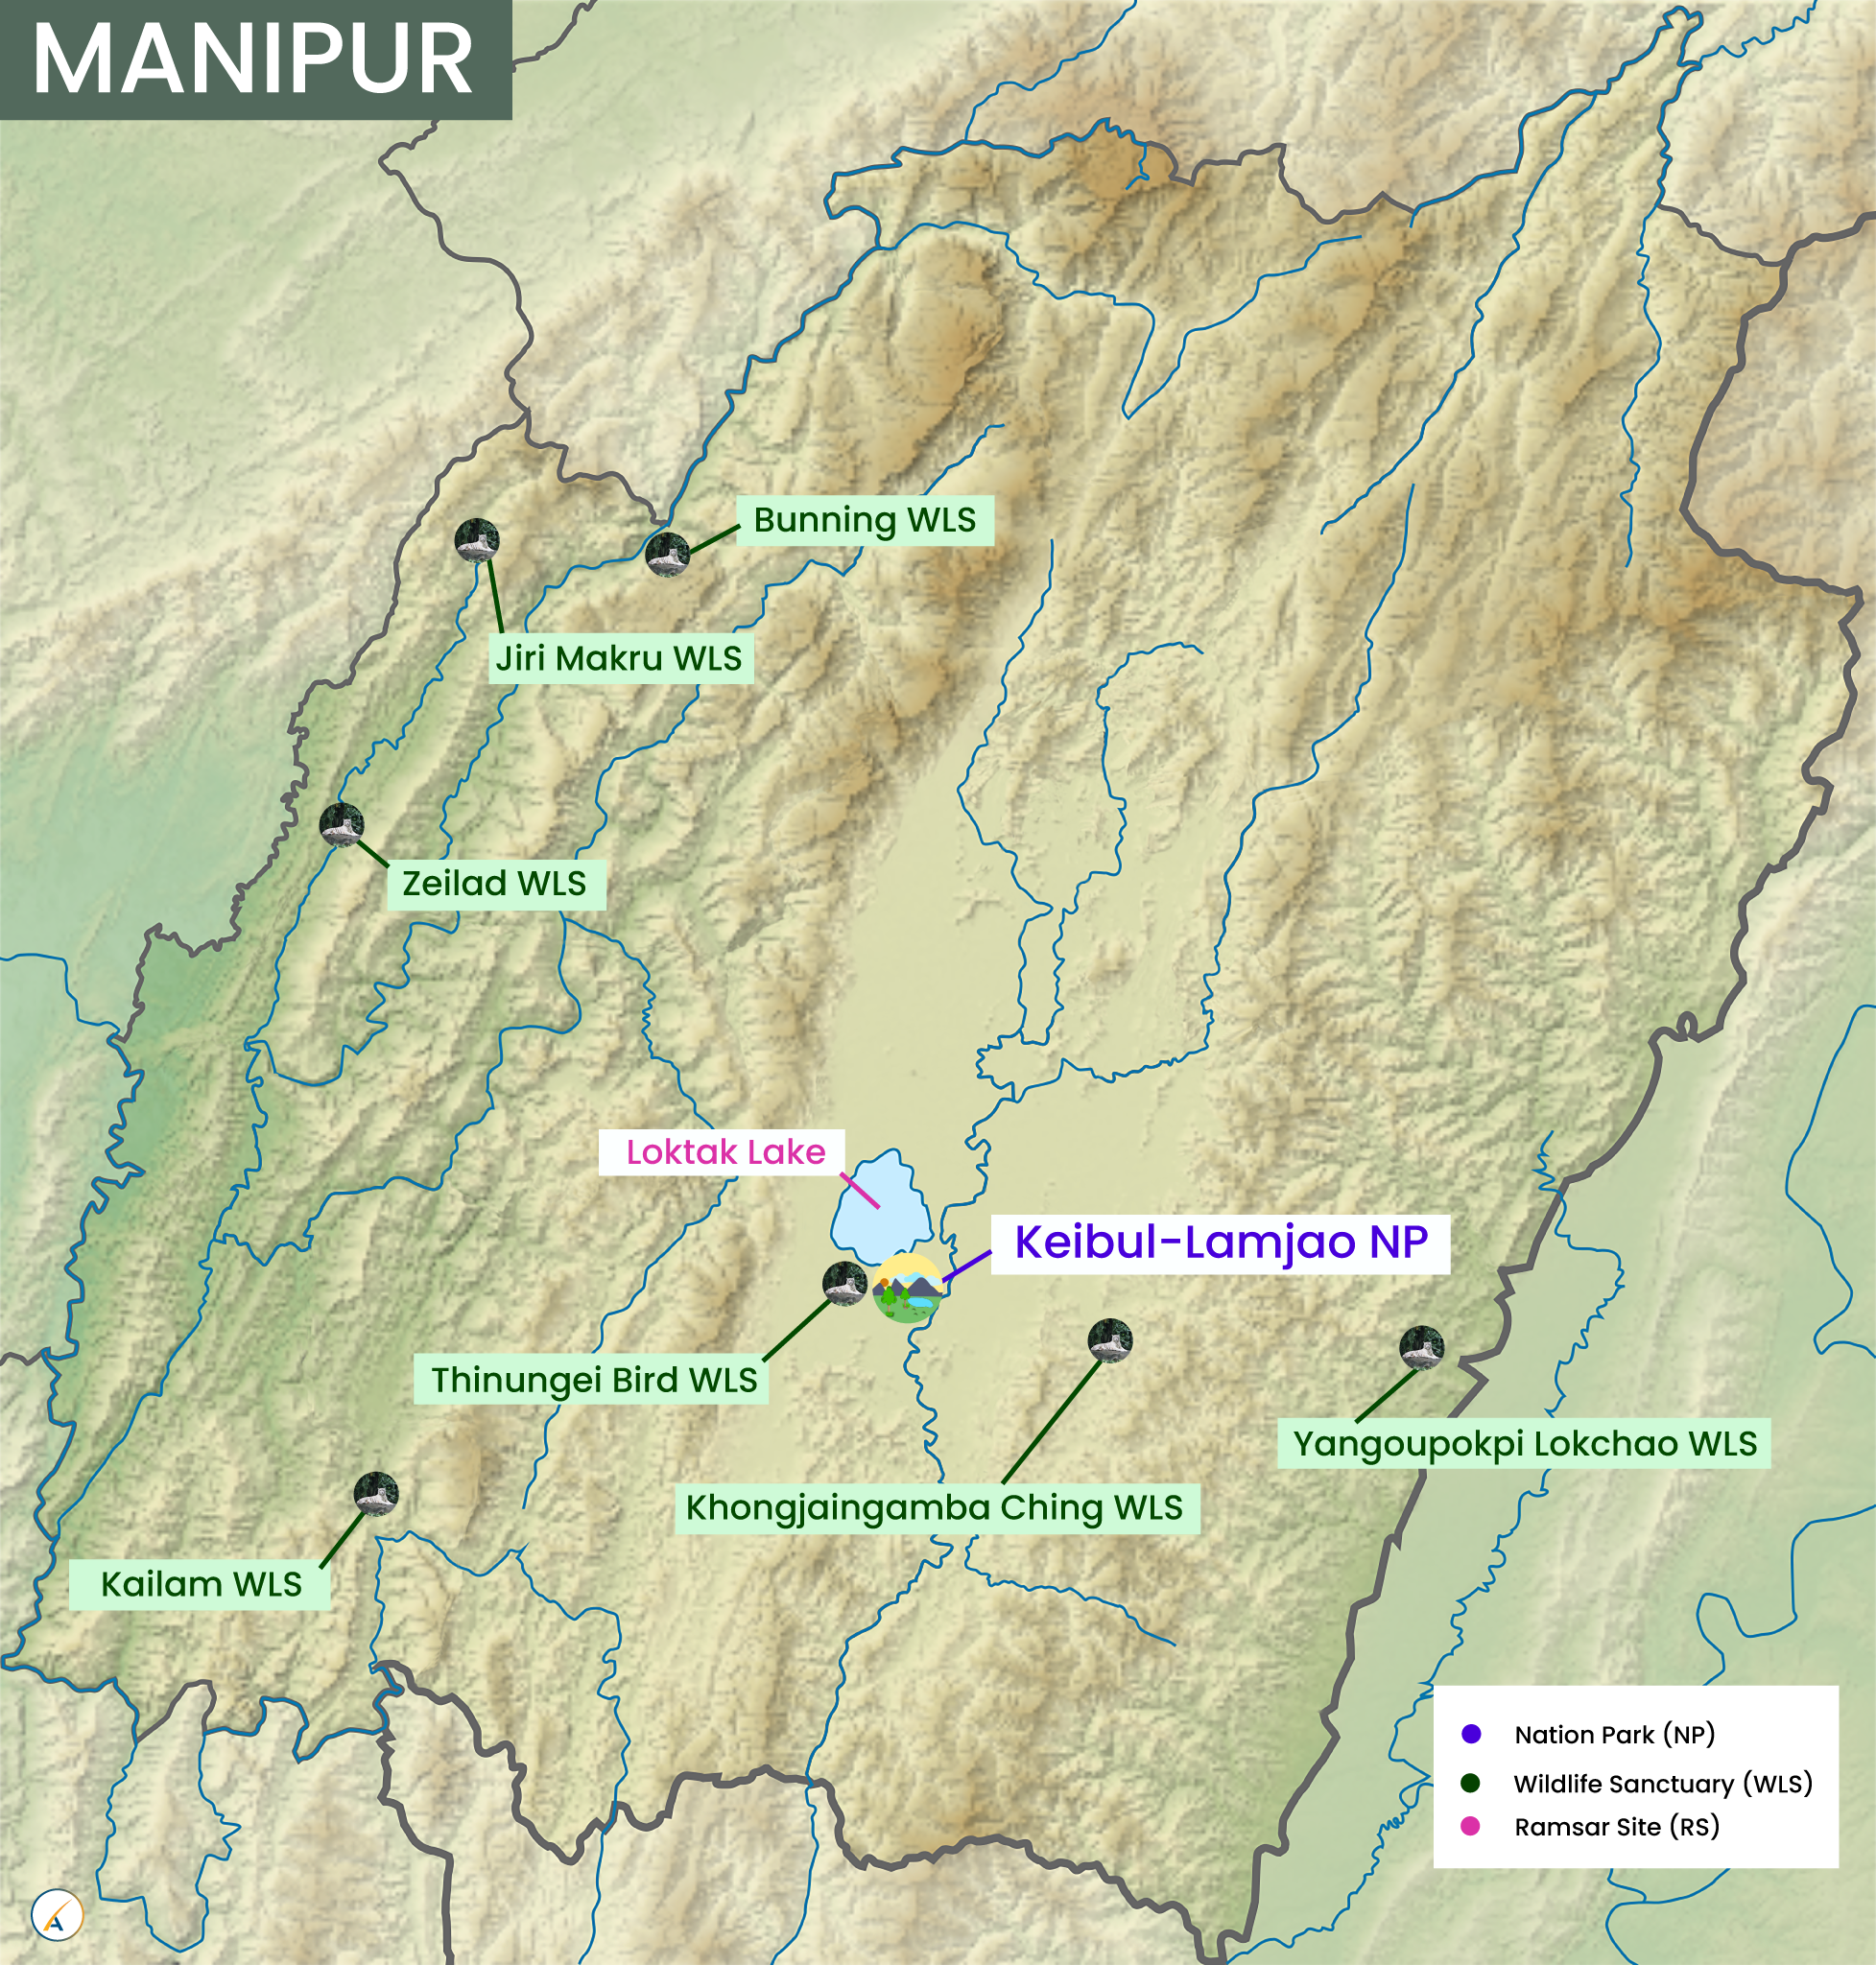 Manipur National Parks, Wildlife Sanctuaries & Ramsar Sites Map